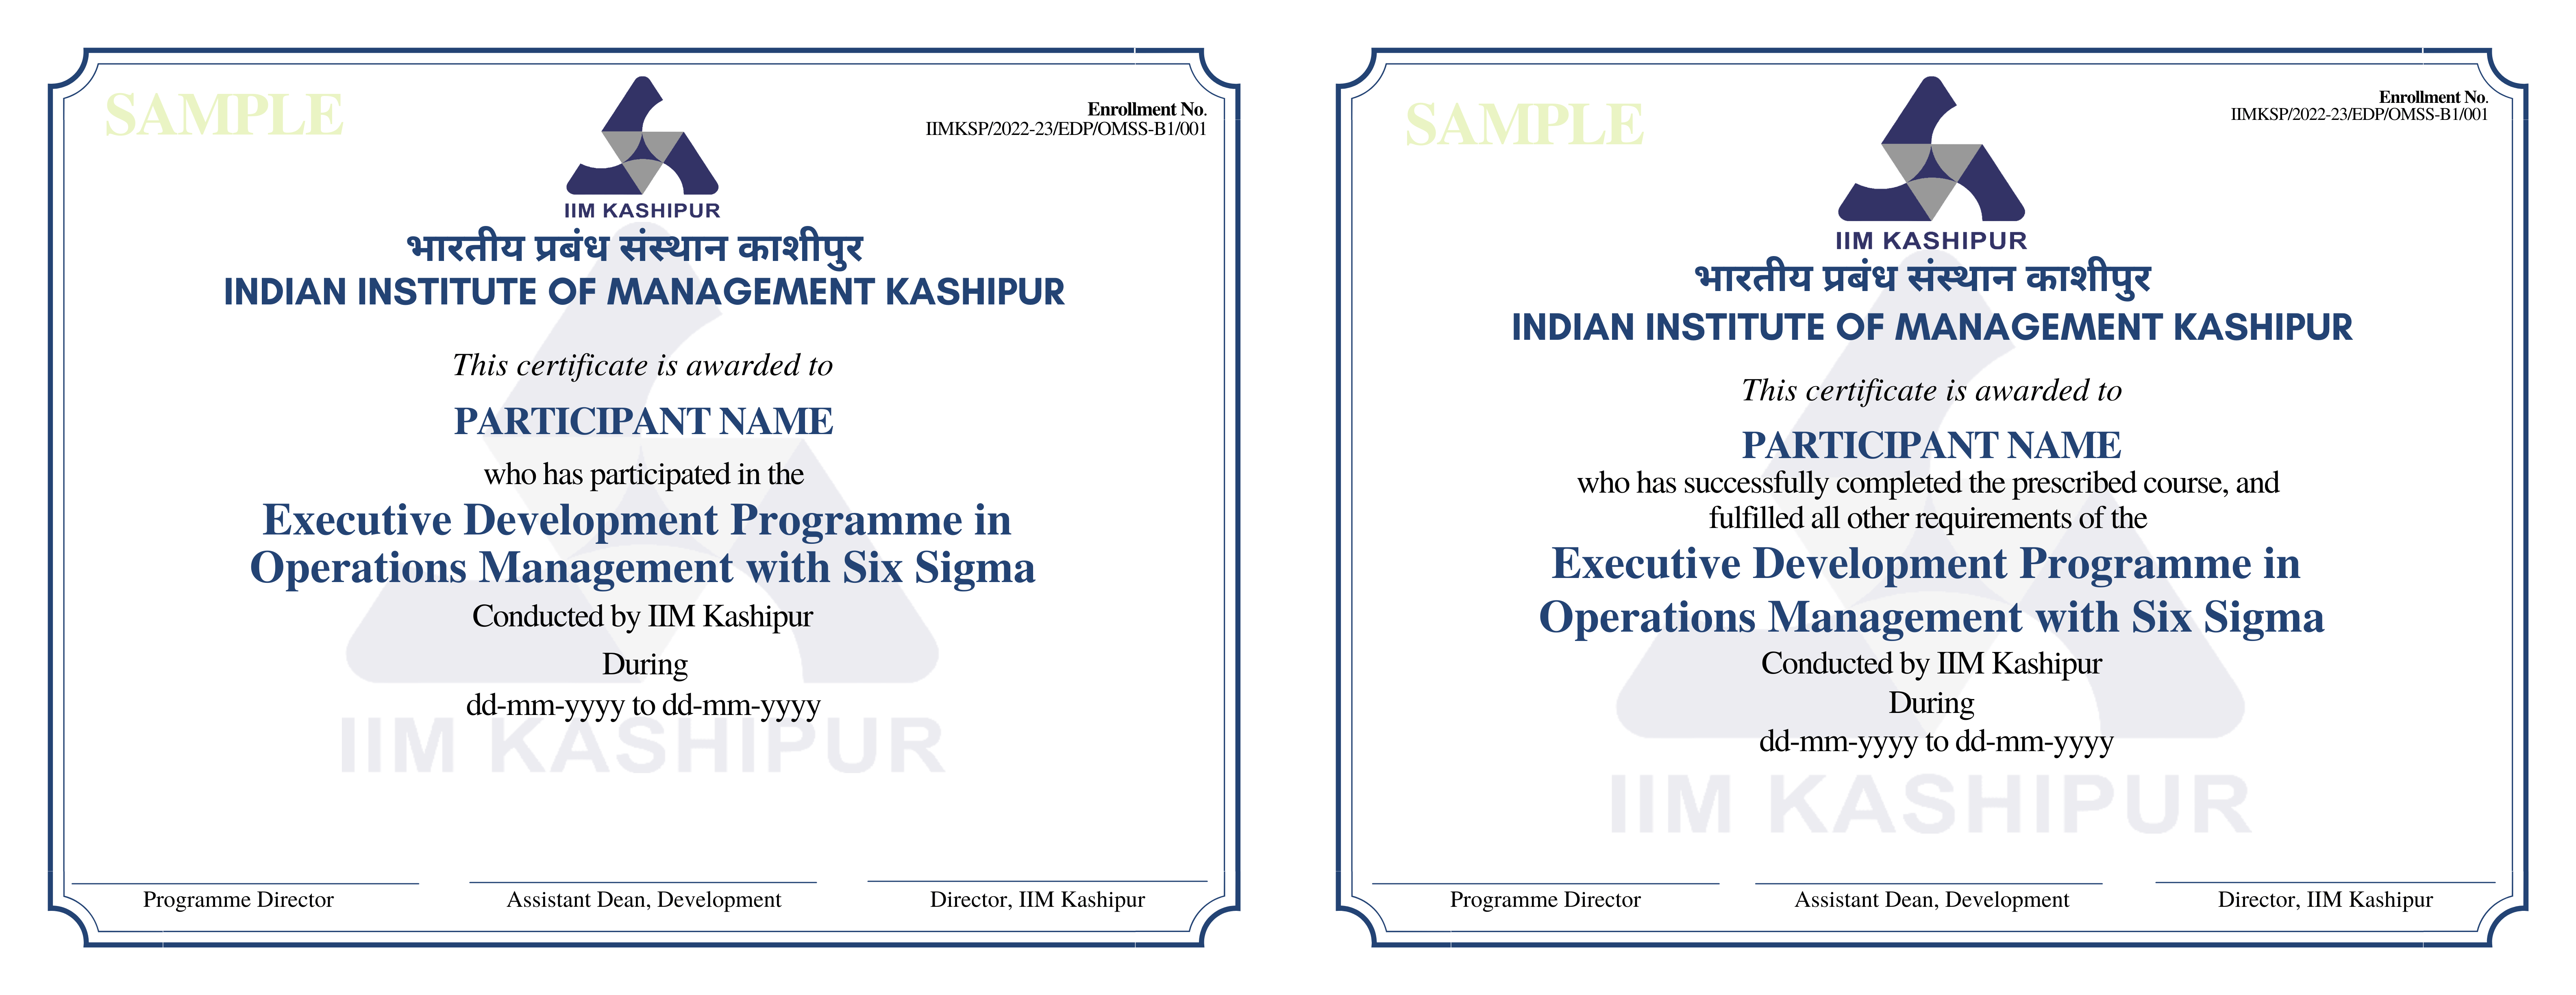 IIM Kashipur Certificate